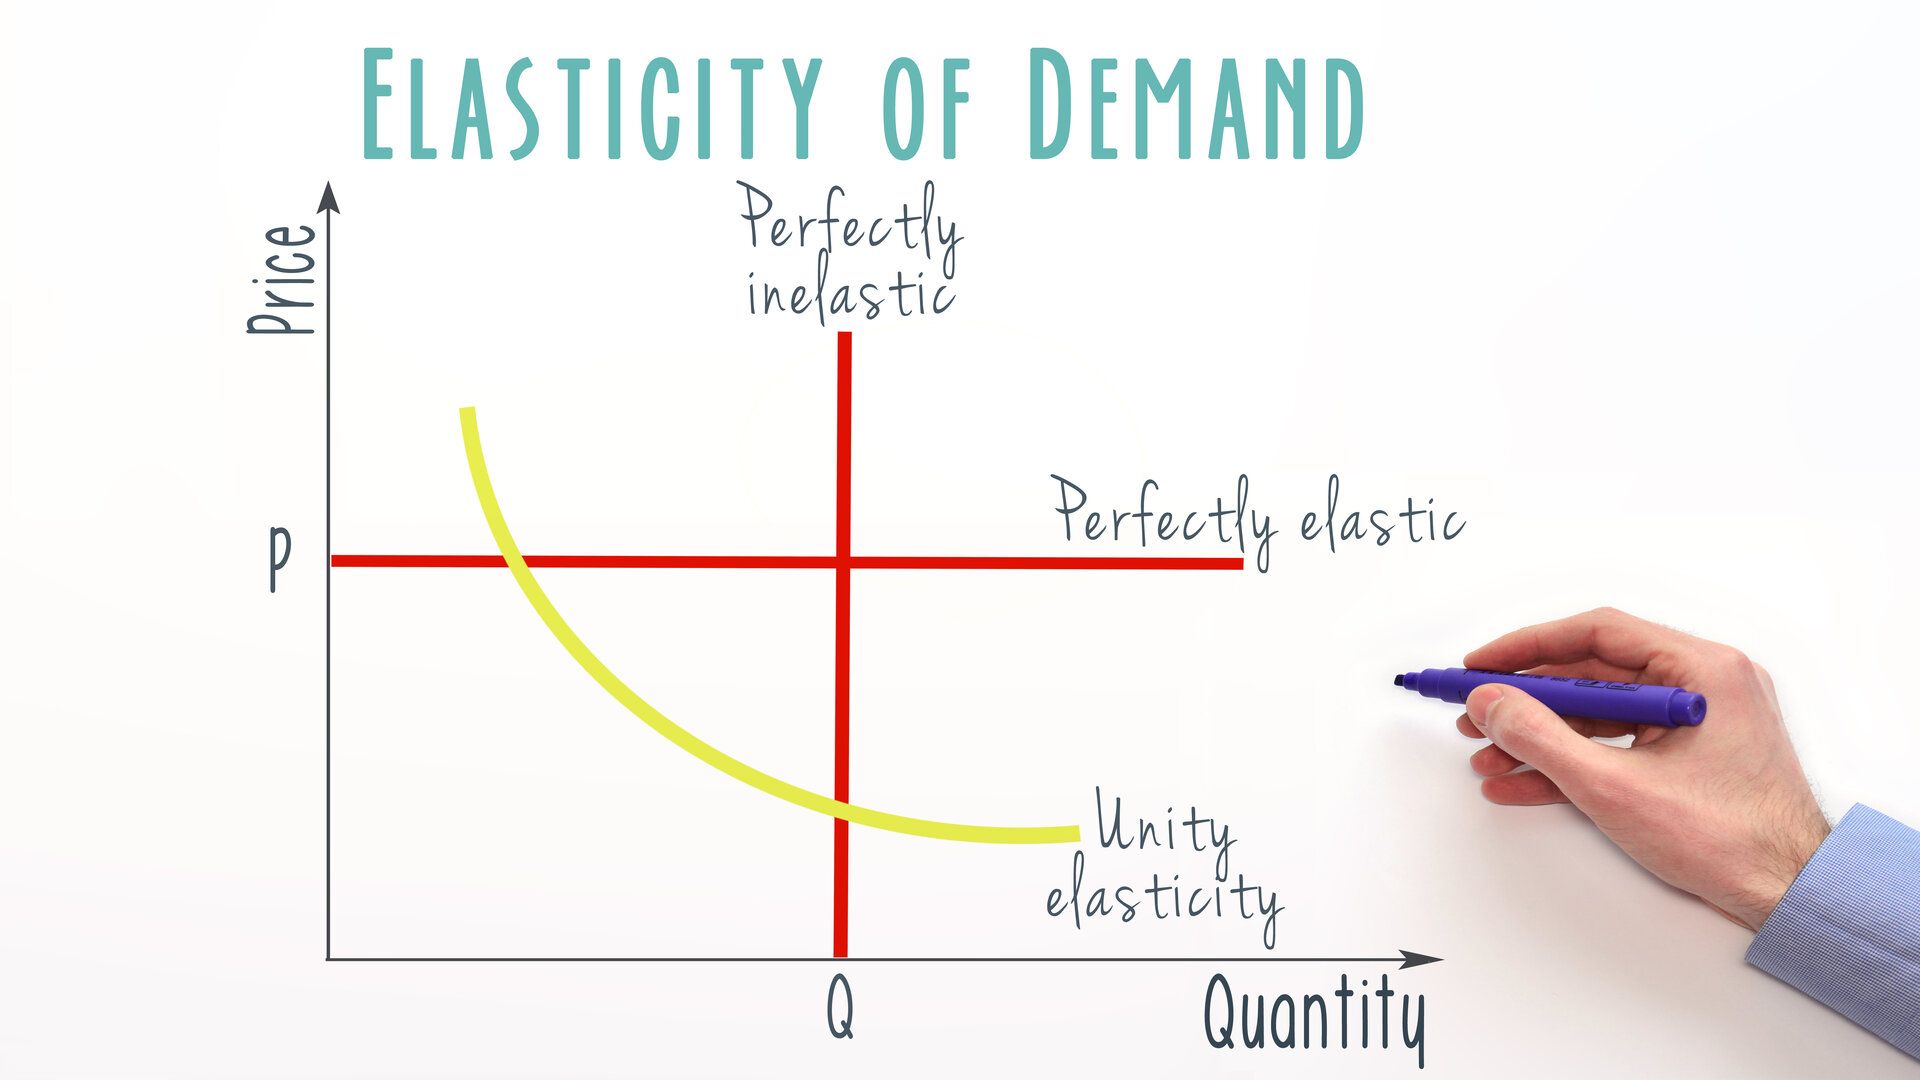 Price Elasticity Of Demand